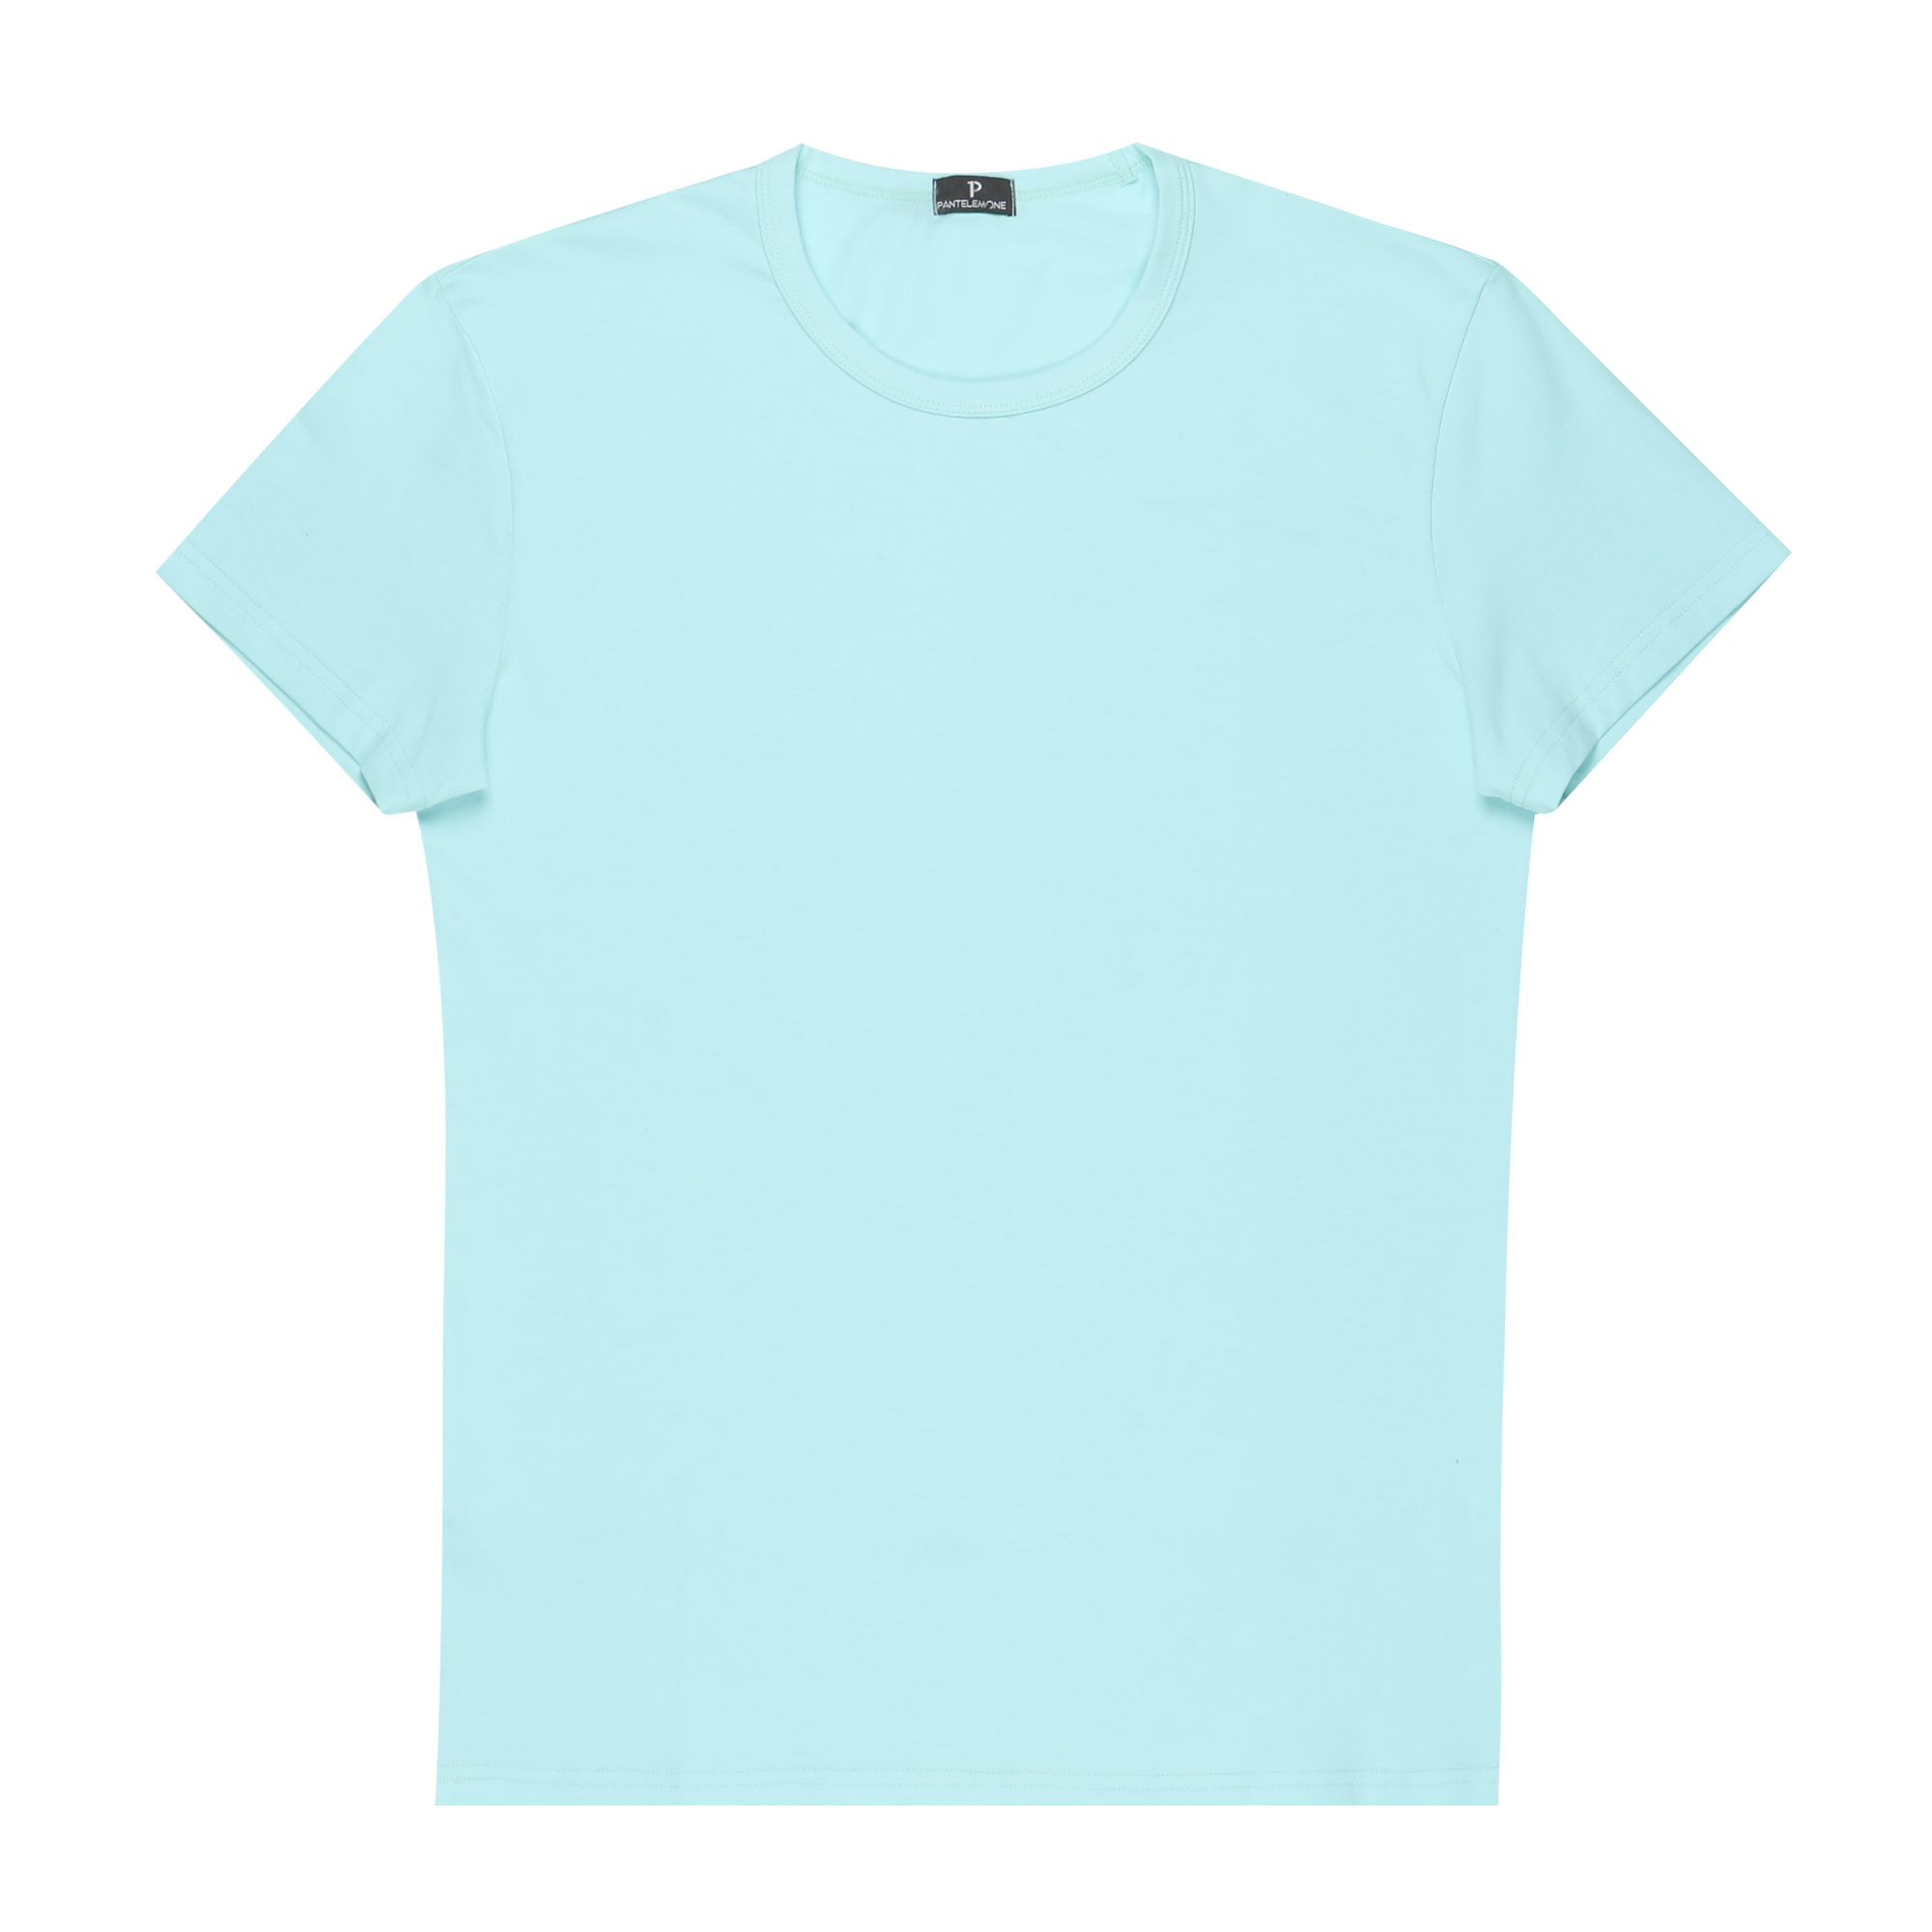 Мужская футболка Pantelemone MF-914 48 ментоловая, цвет ментоловый, размер 48 - фото 1